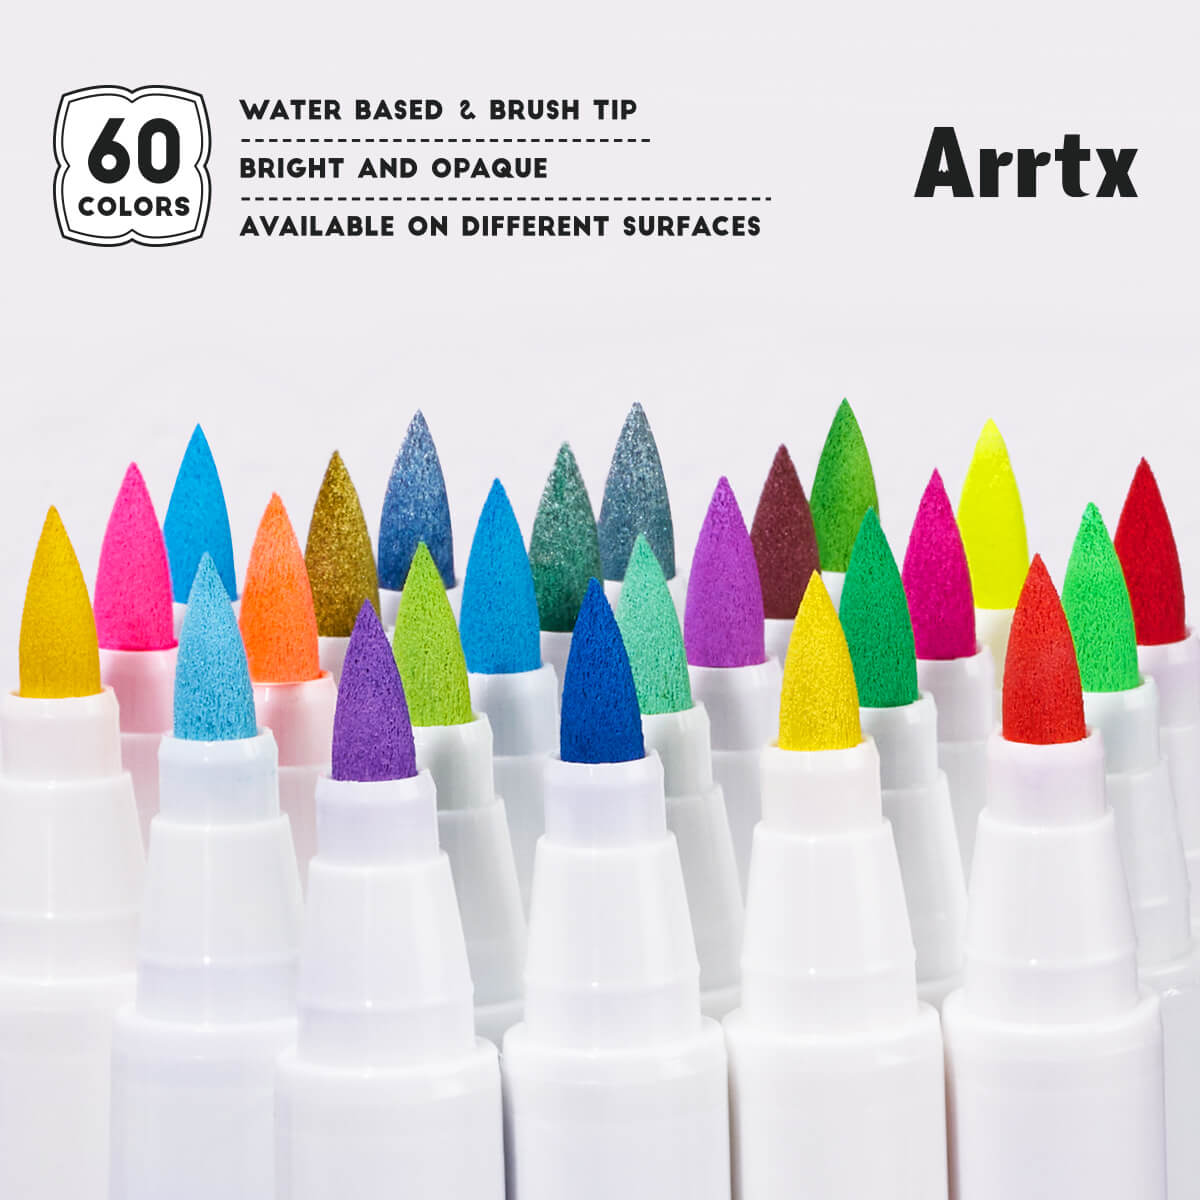 Arrtx Paint Pens 60 Regular Colors Acrylic Marker Brush Tip Art Supplies 60A